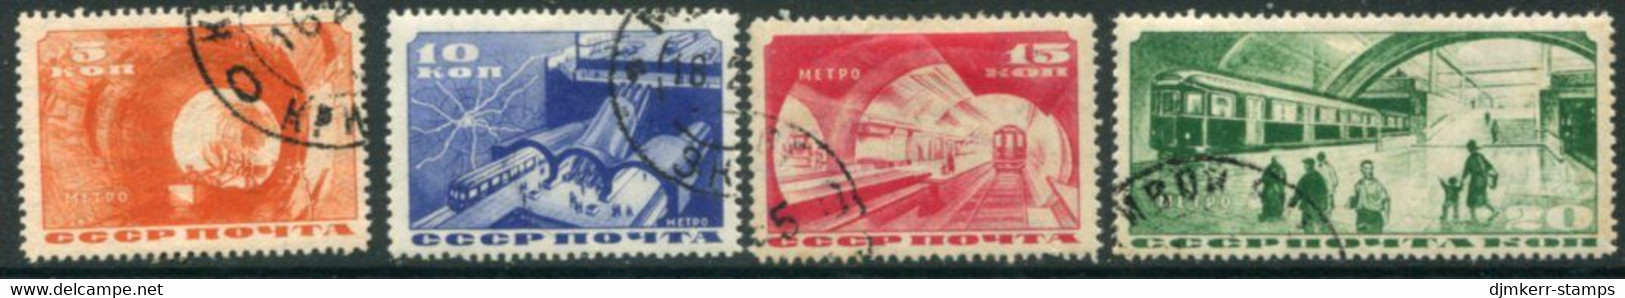 SOVIET UNION 1935 Opening Of Moscow Metro Set, Fine Used.  Michel 509-12 - Gebraucht